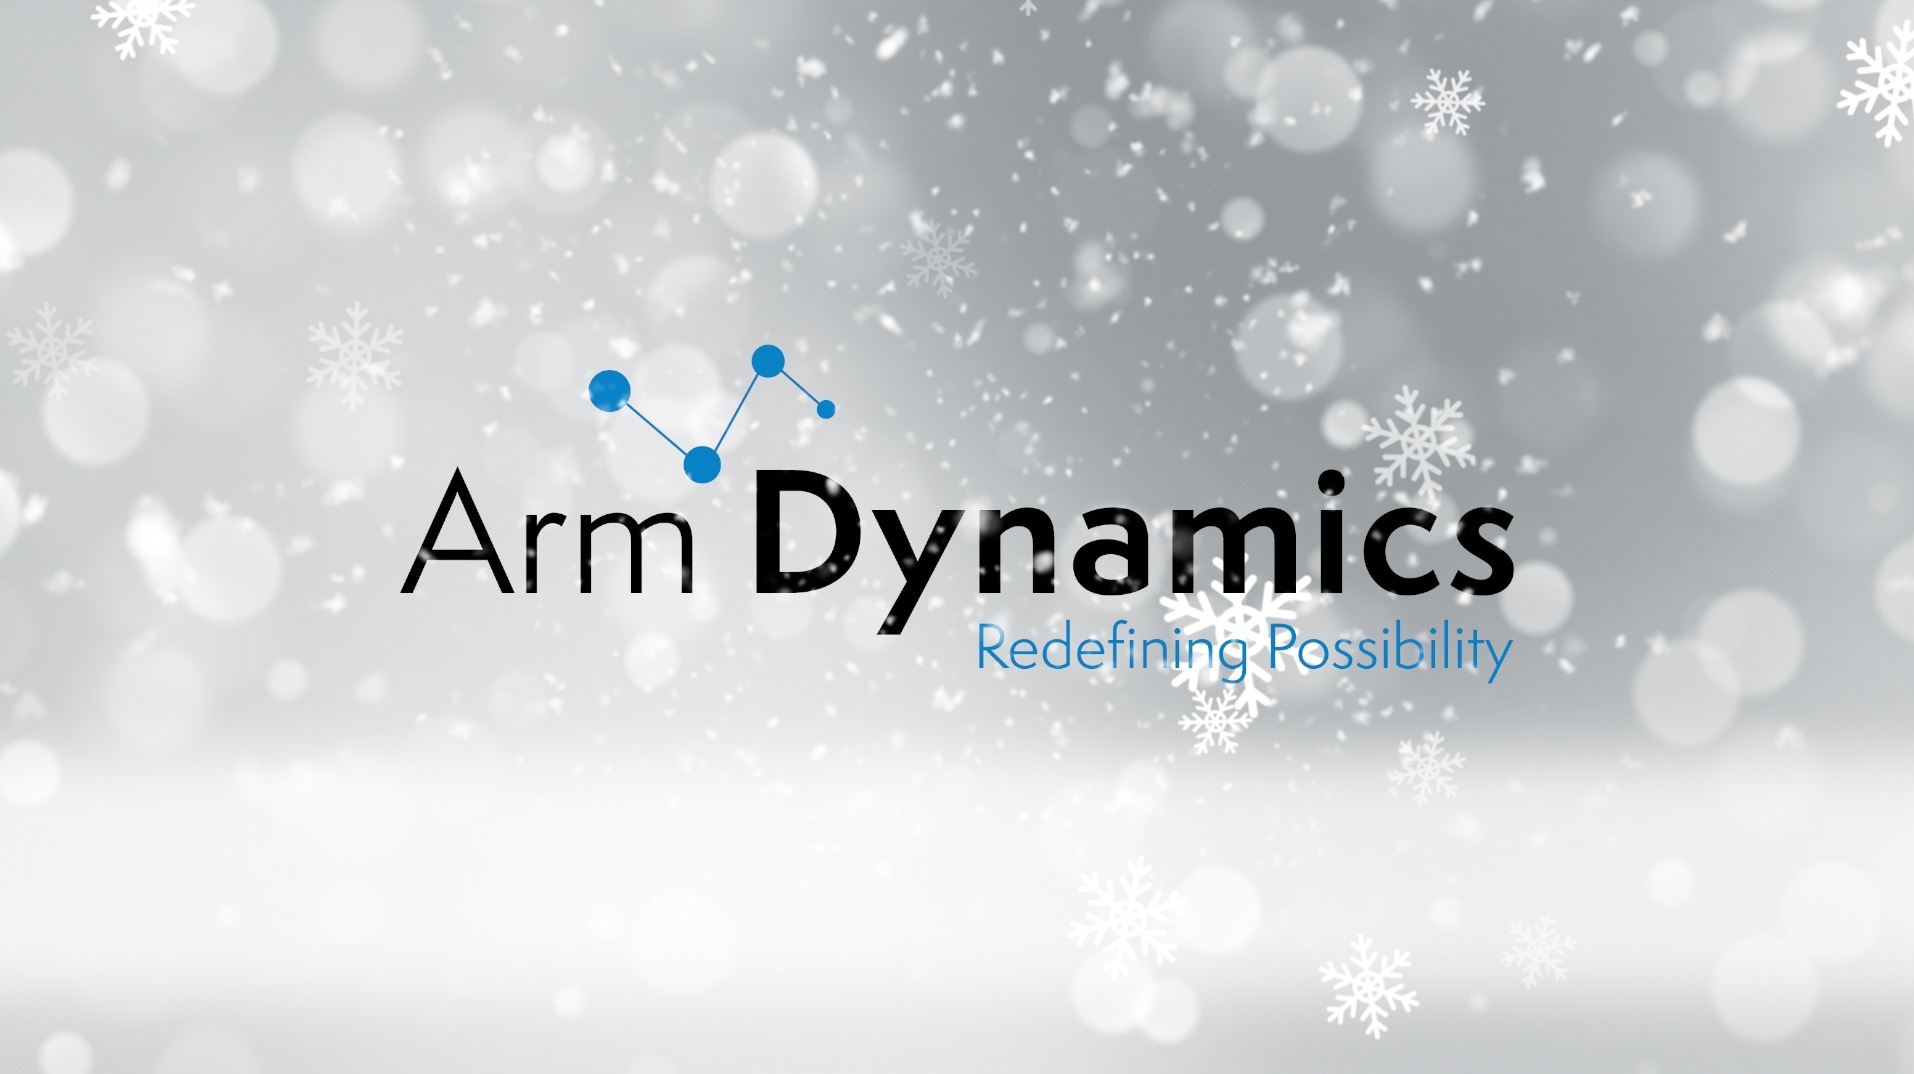 Happy Holidays from Arm Dynamics!